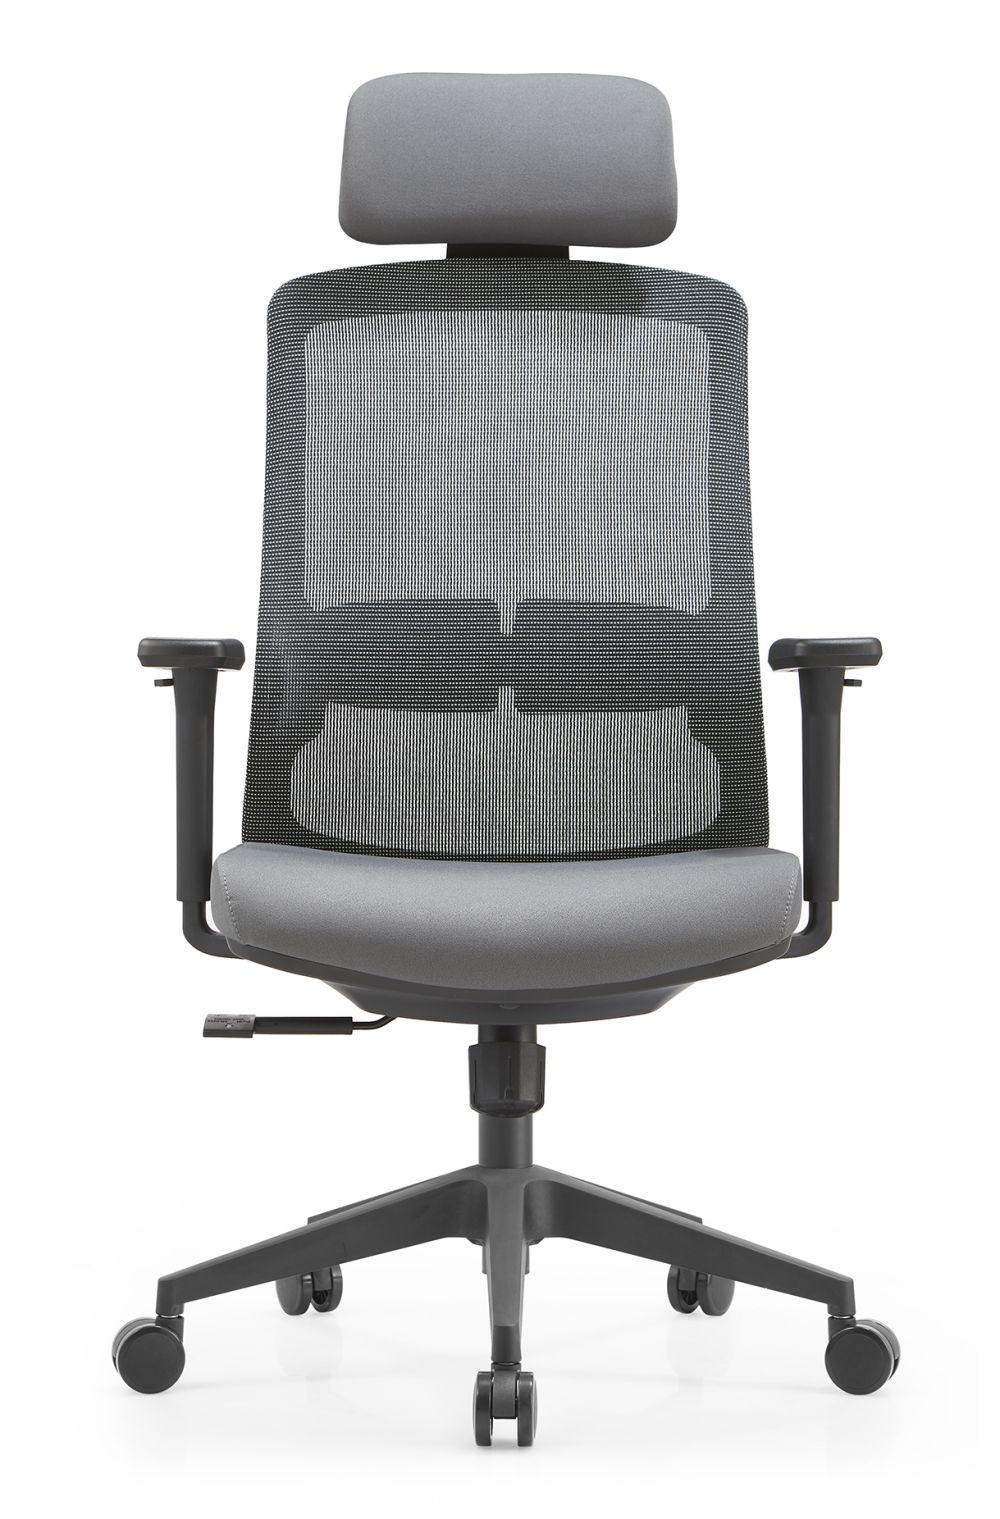 Home Ergonomic Office Chair (1)